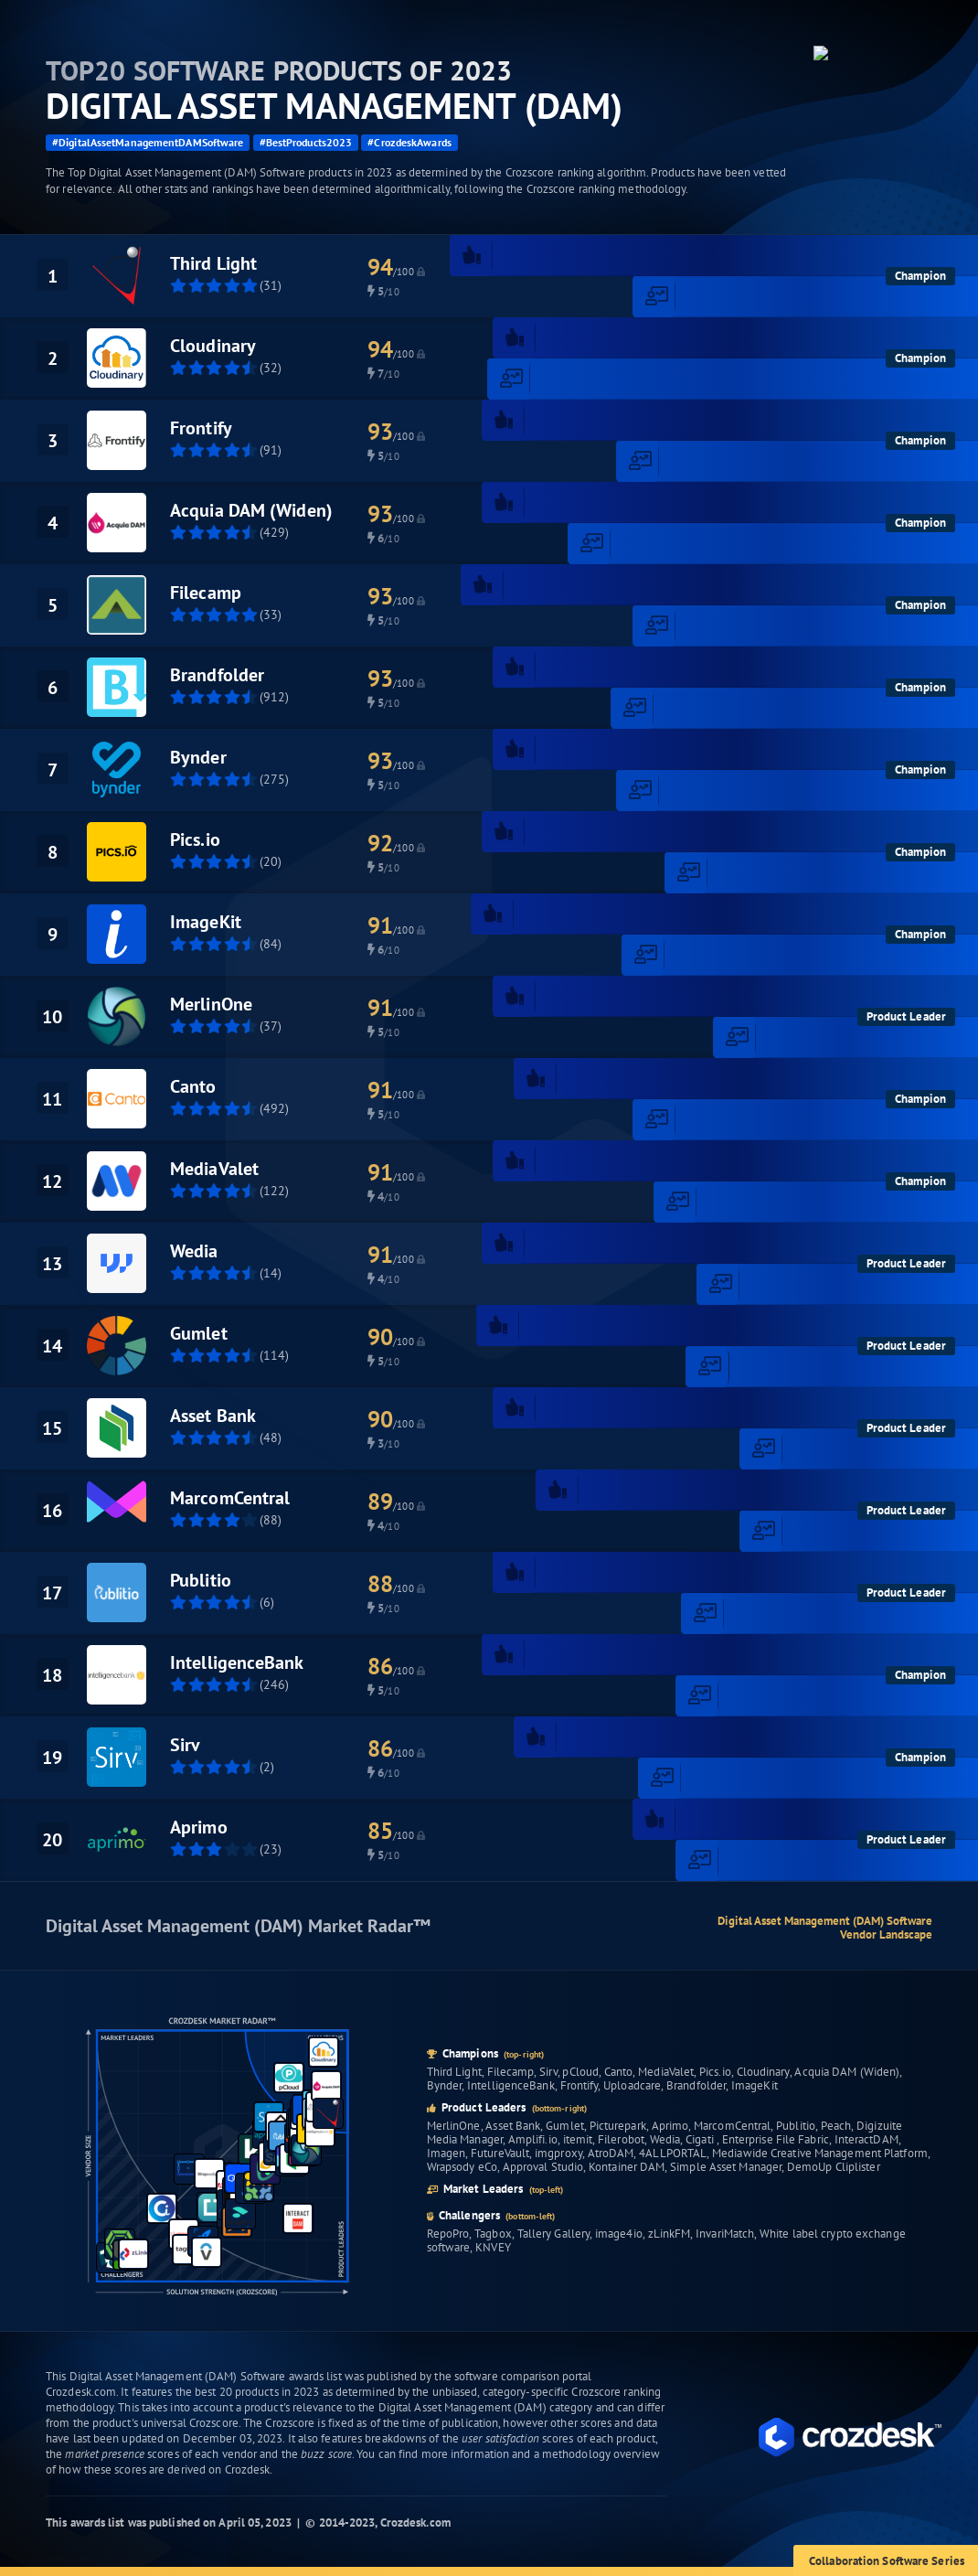 Top 20 Digital Asset Management (DAM) Software of 2023 Infographic